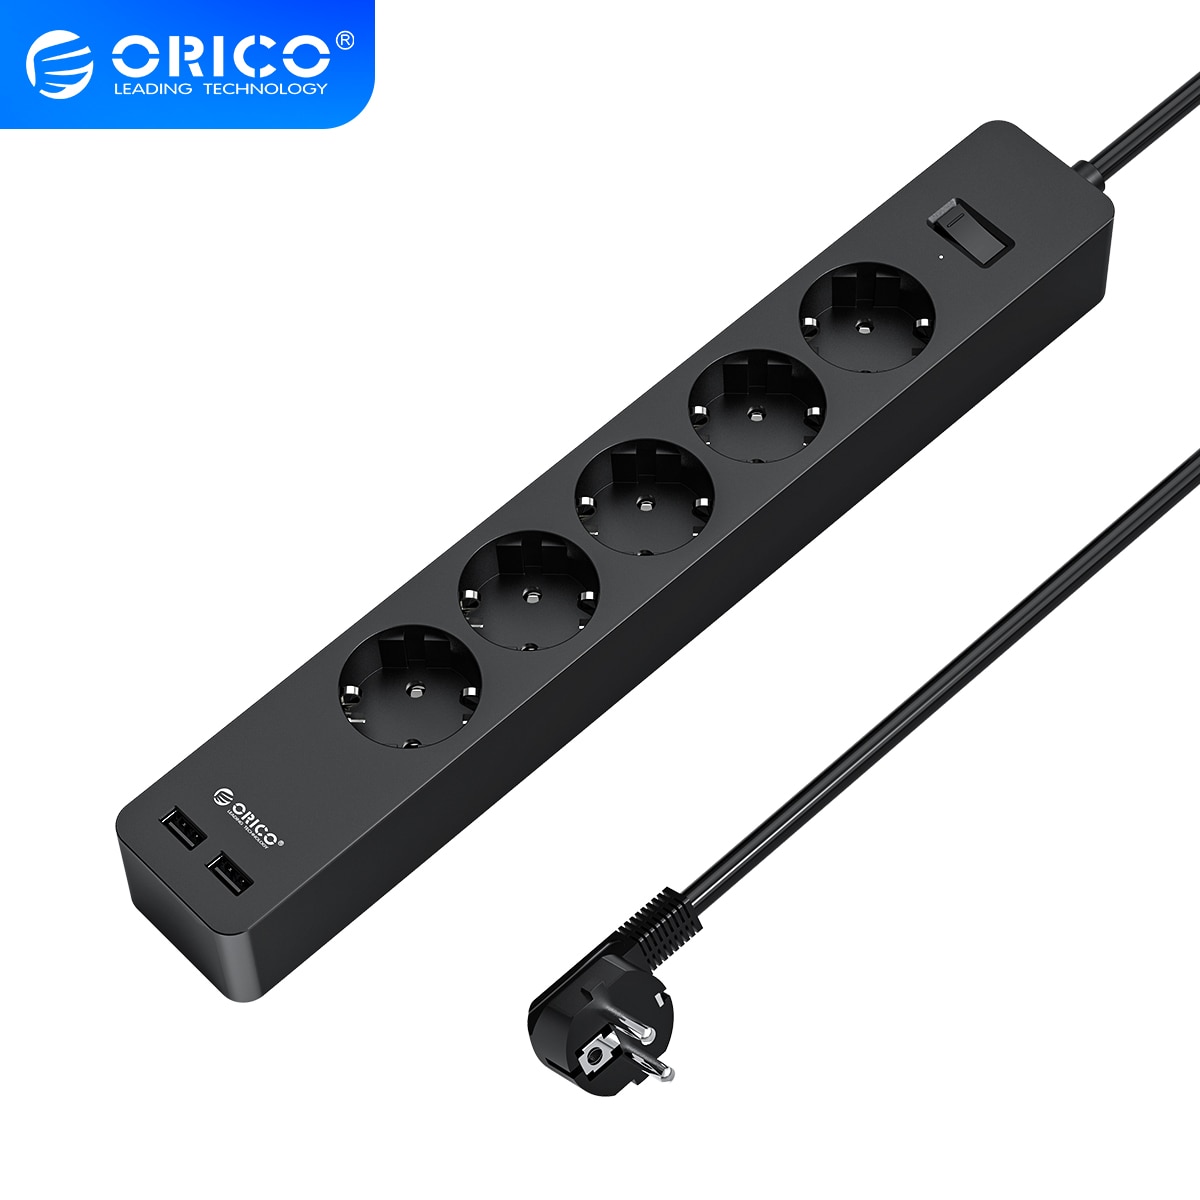 ORICO 3/5 AC + 2 USB 전원 스트립 전자 소켓 홈 오피스 서지 보호기 EU 플러그 확장 스마트 소켓 벽 장착형 충전기